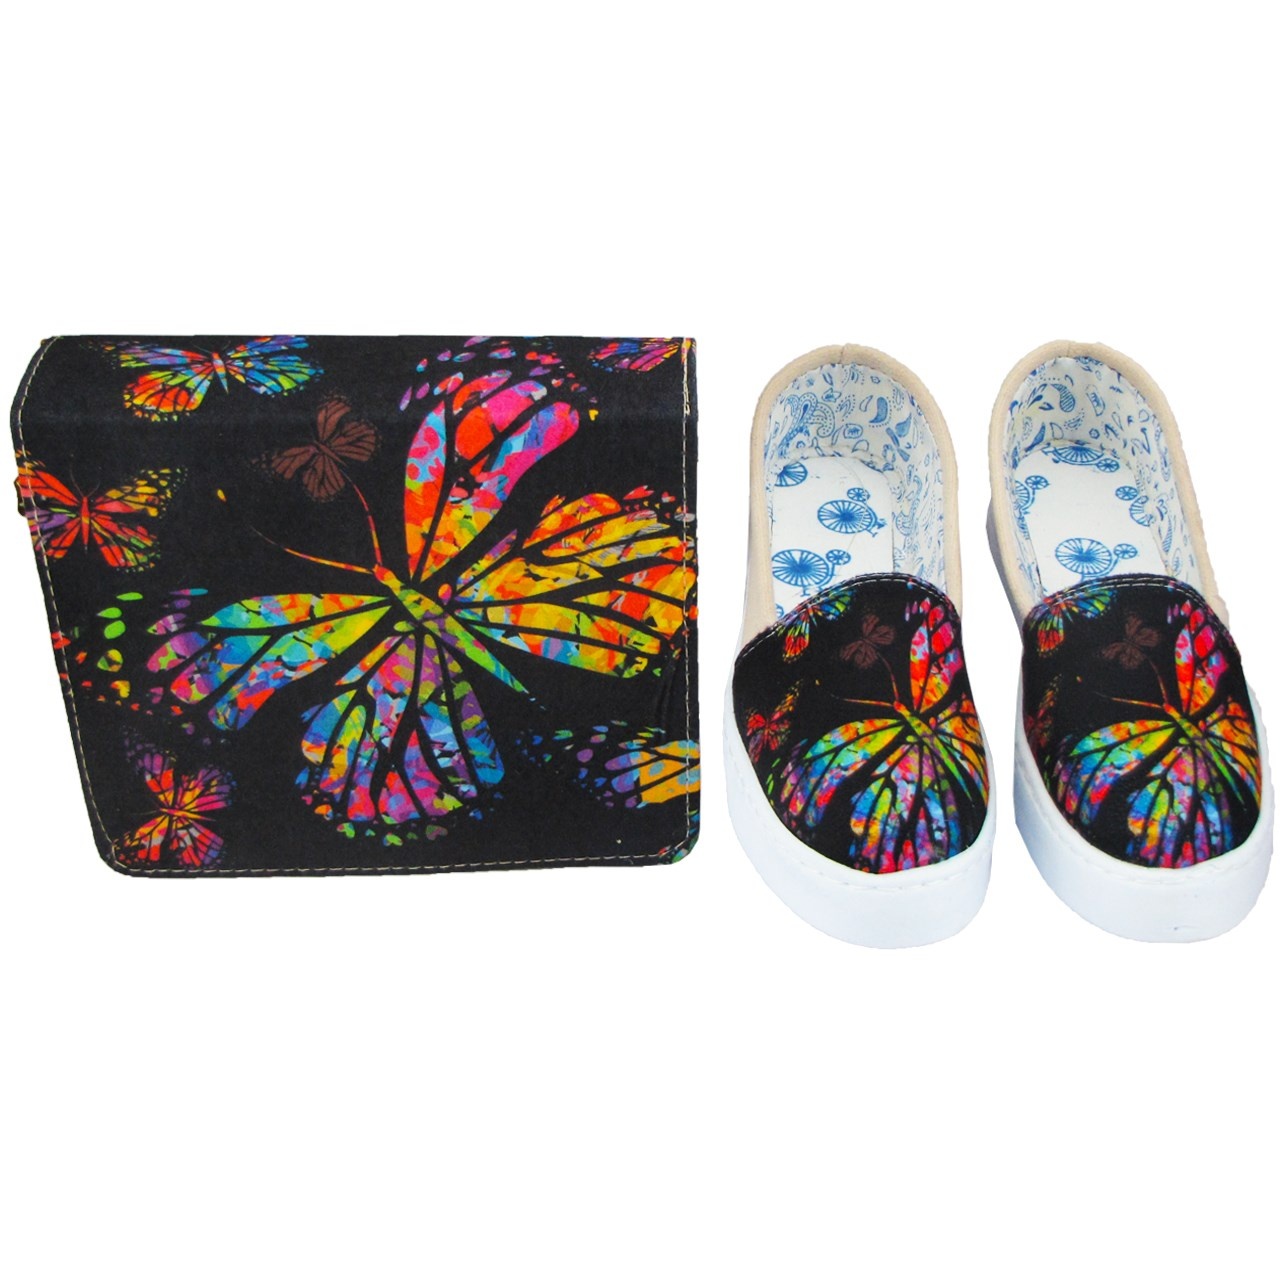 ست کیف و کفش مدل پروانه Butterfly